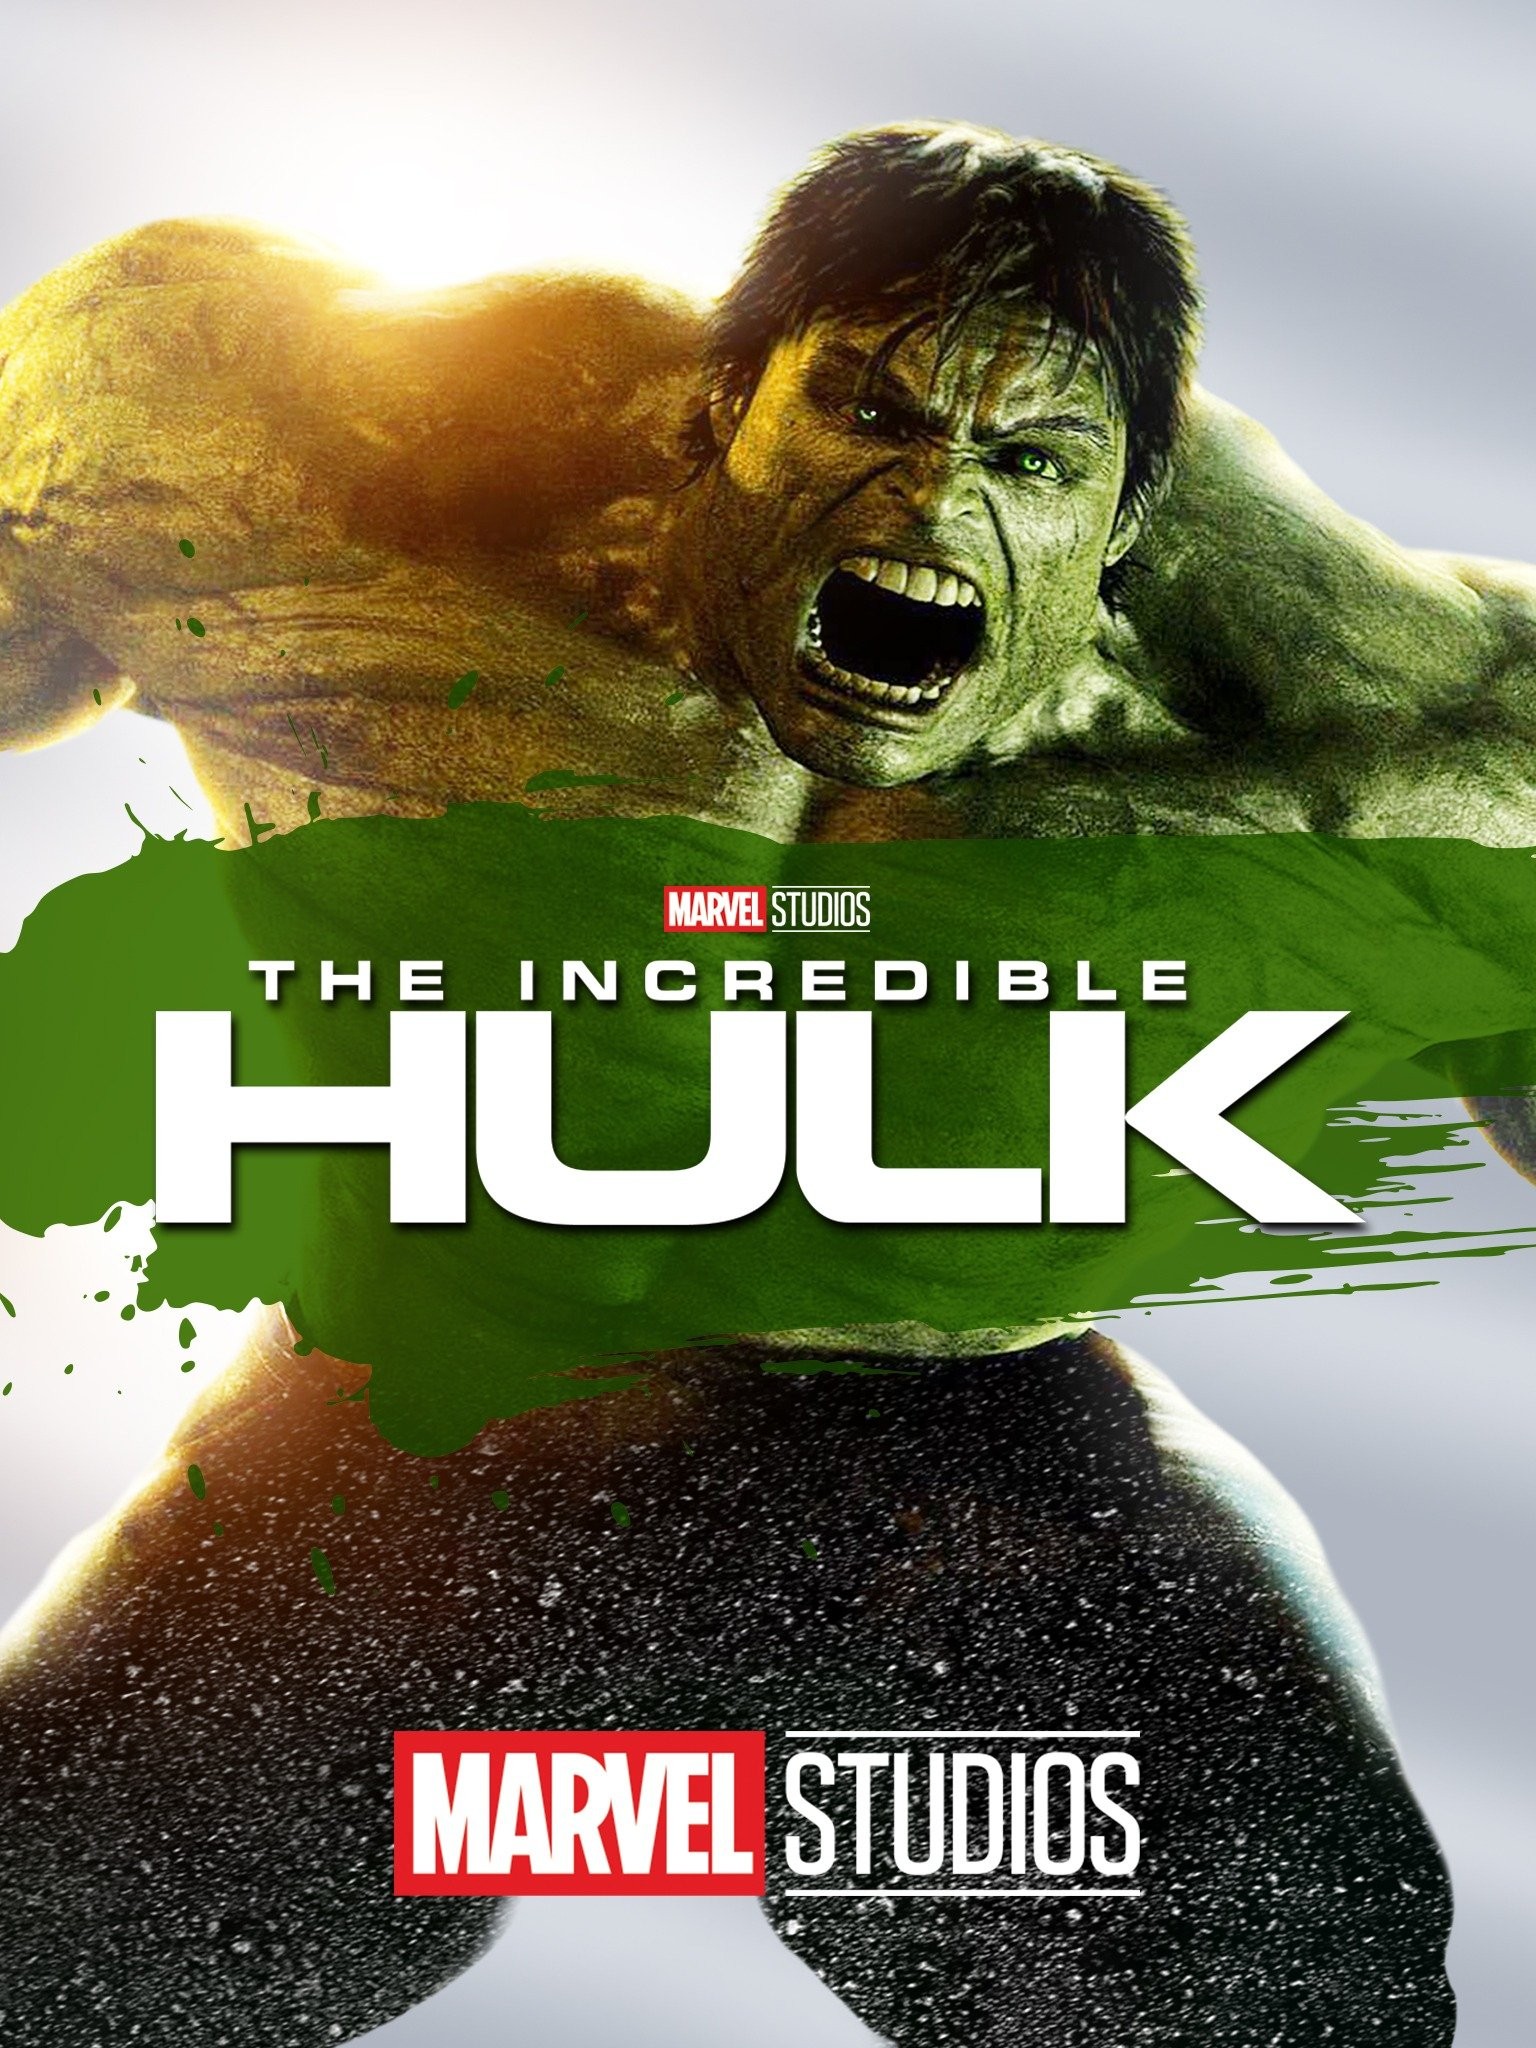 Taking superheroes too seriously: why Edward Norton's Hulk made